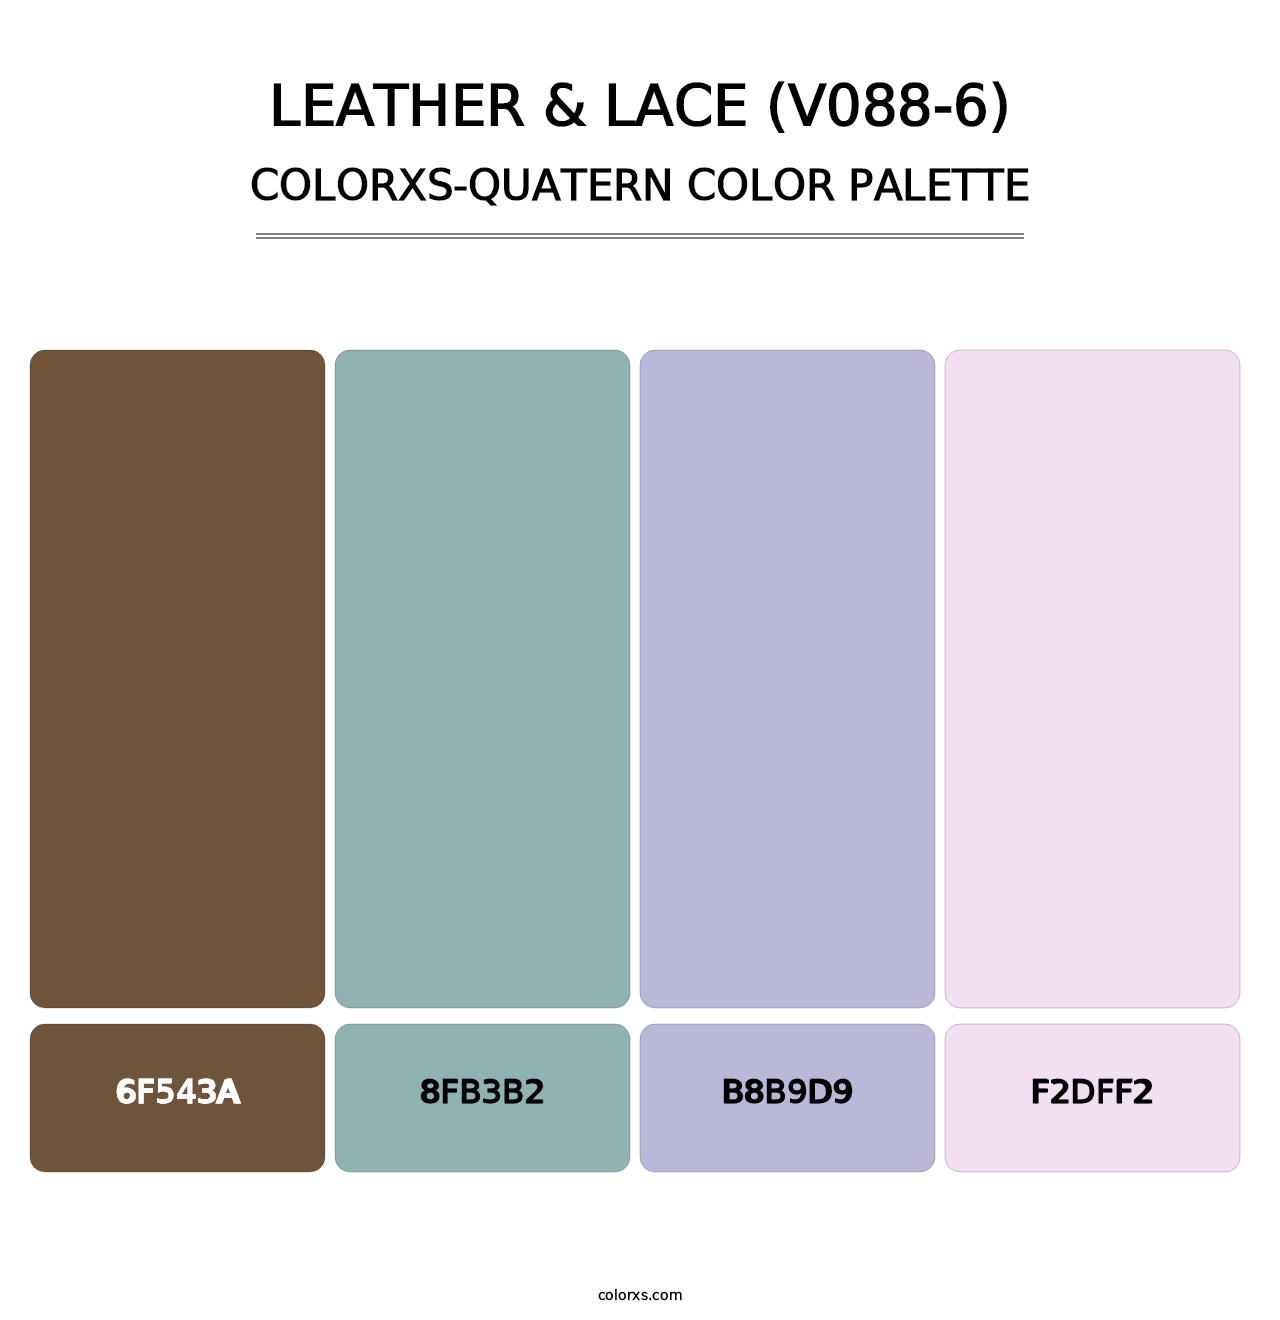 Leather & Lace (V088-6) - Colorxs Quatern Palette